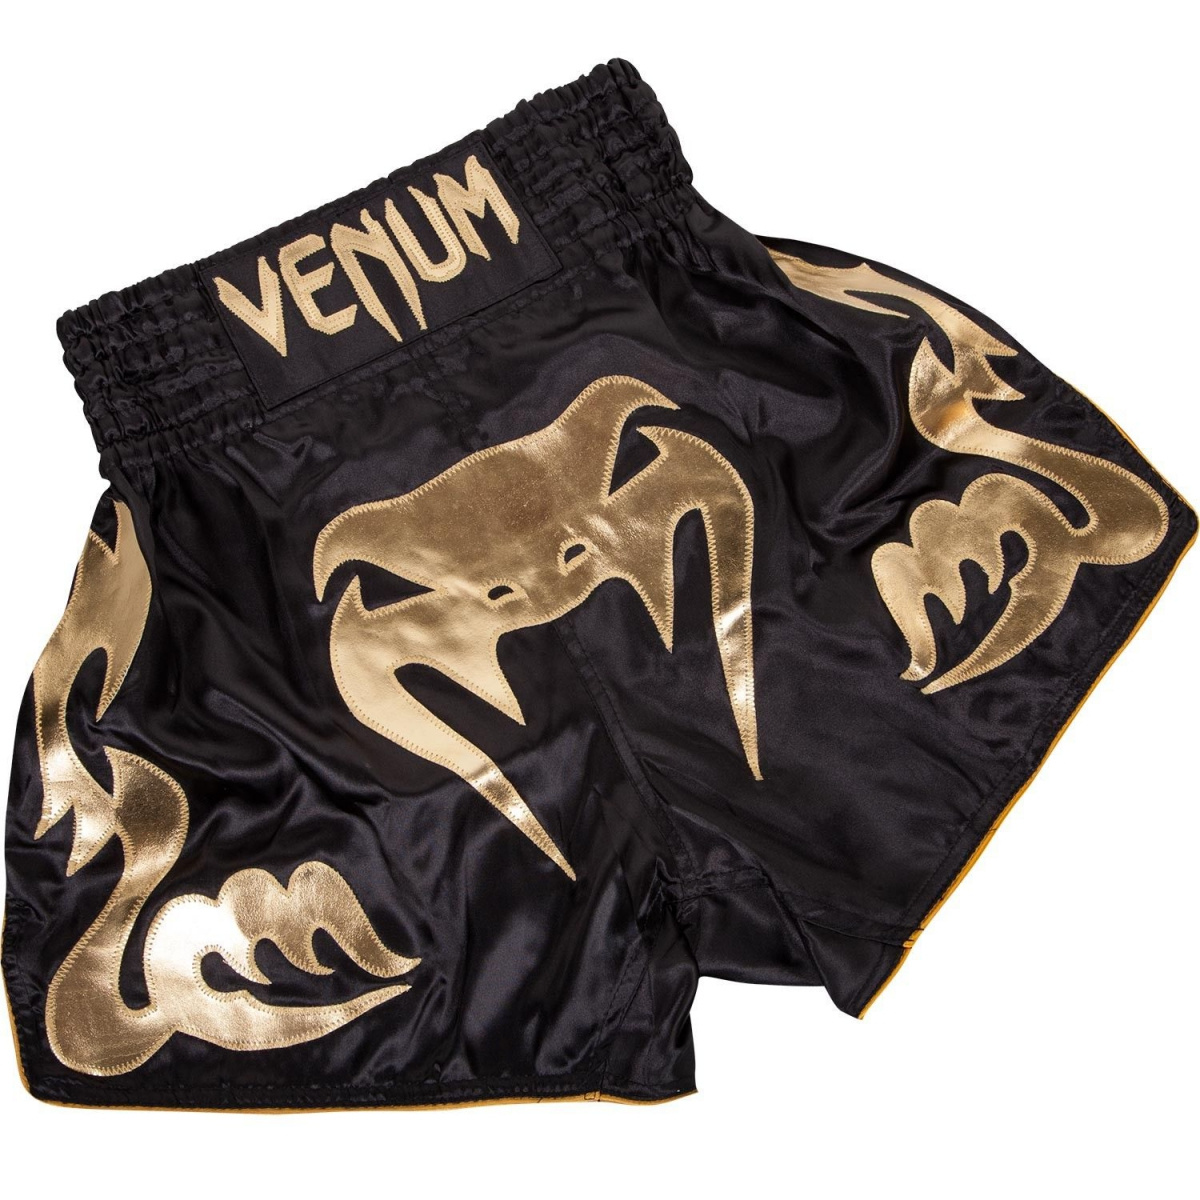 Шорты для тайского бокса Venum Inferno Muay Thai Shorts Black Gold